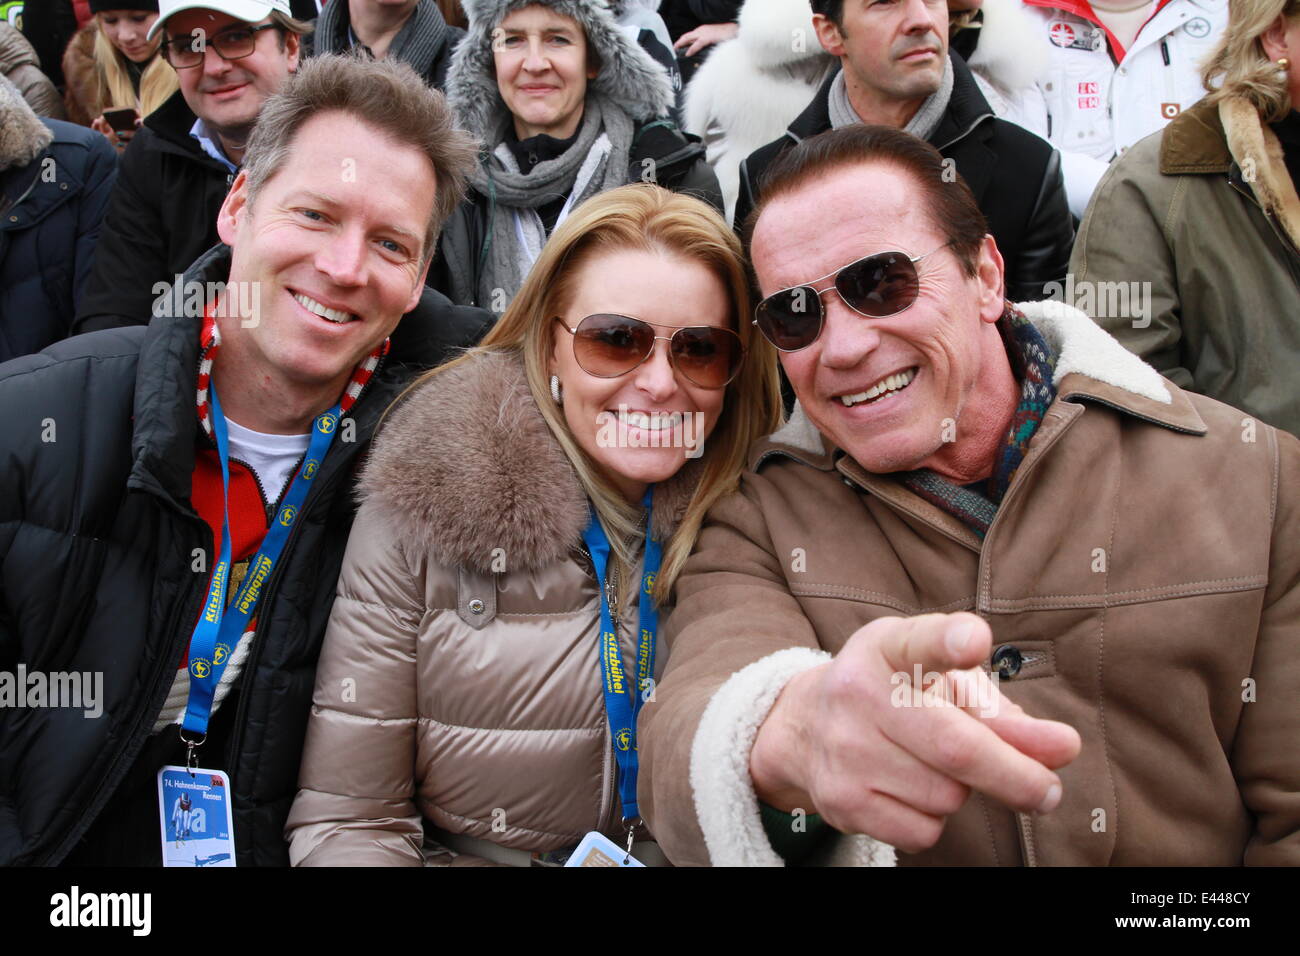 Arnold Schwarzenegger and girlfriend Heather Milligan sitting in the VIP grandstand at the 2014 FIS Alpine World Cup  Featuring: Arnold Schwarzenegger,Heather Milligan Where: Kitzbuehel, Austria When: 25 Jan 2014 Stock Photo